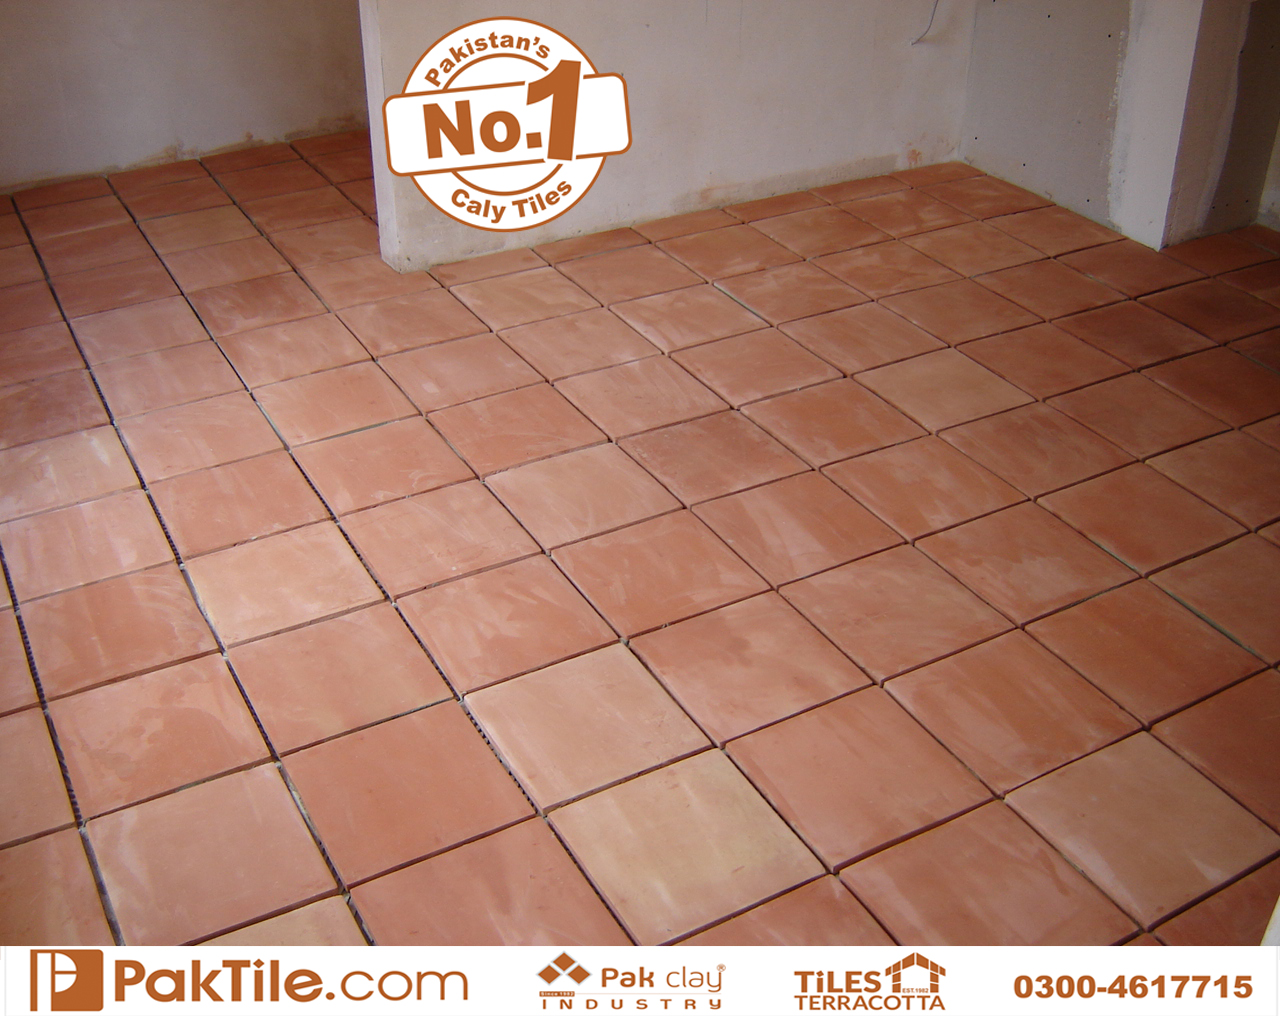 2 Pak Clay New Red Bricks Flooring tiles Traditional Tiles Pakistan Terracotta Floor Tiles Rates in Pakistan Images